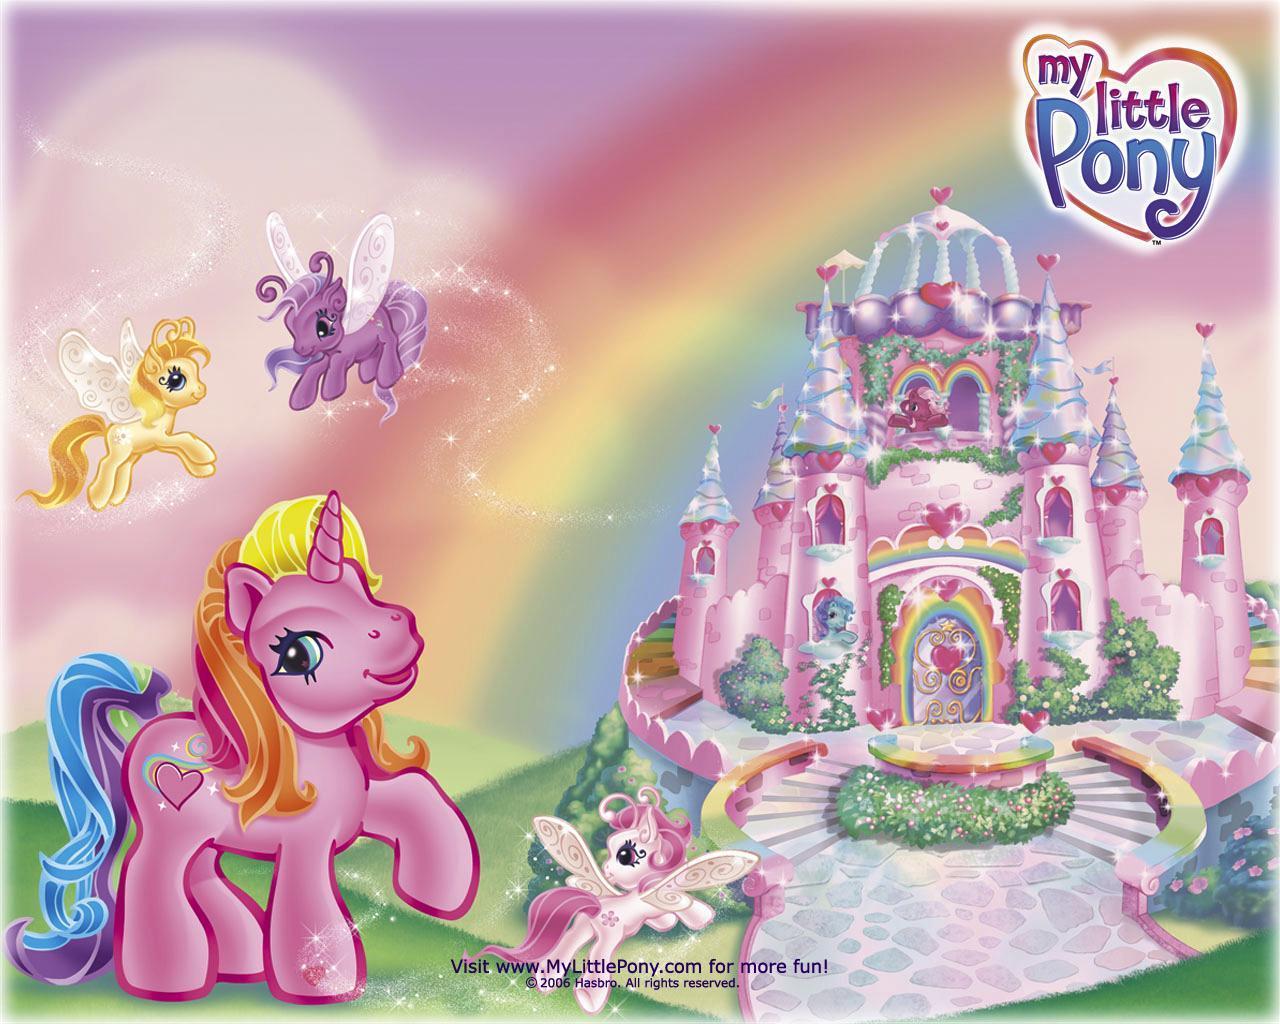 My Little Pony Wallpaper Download Free